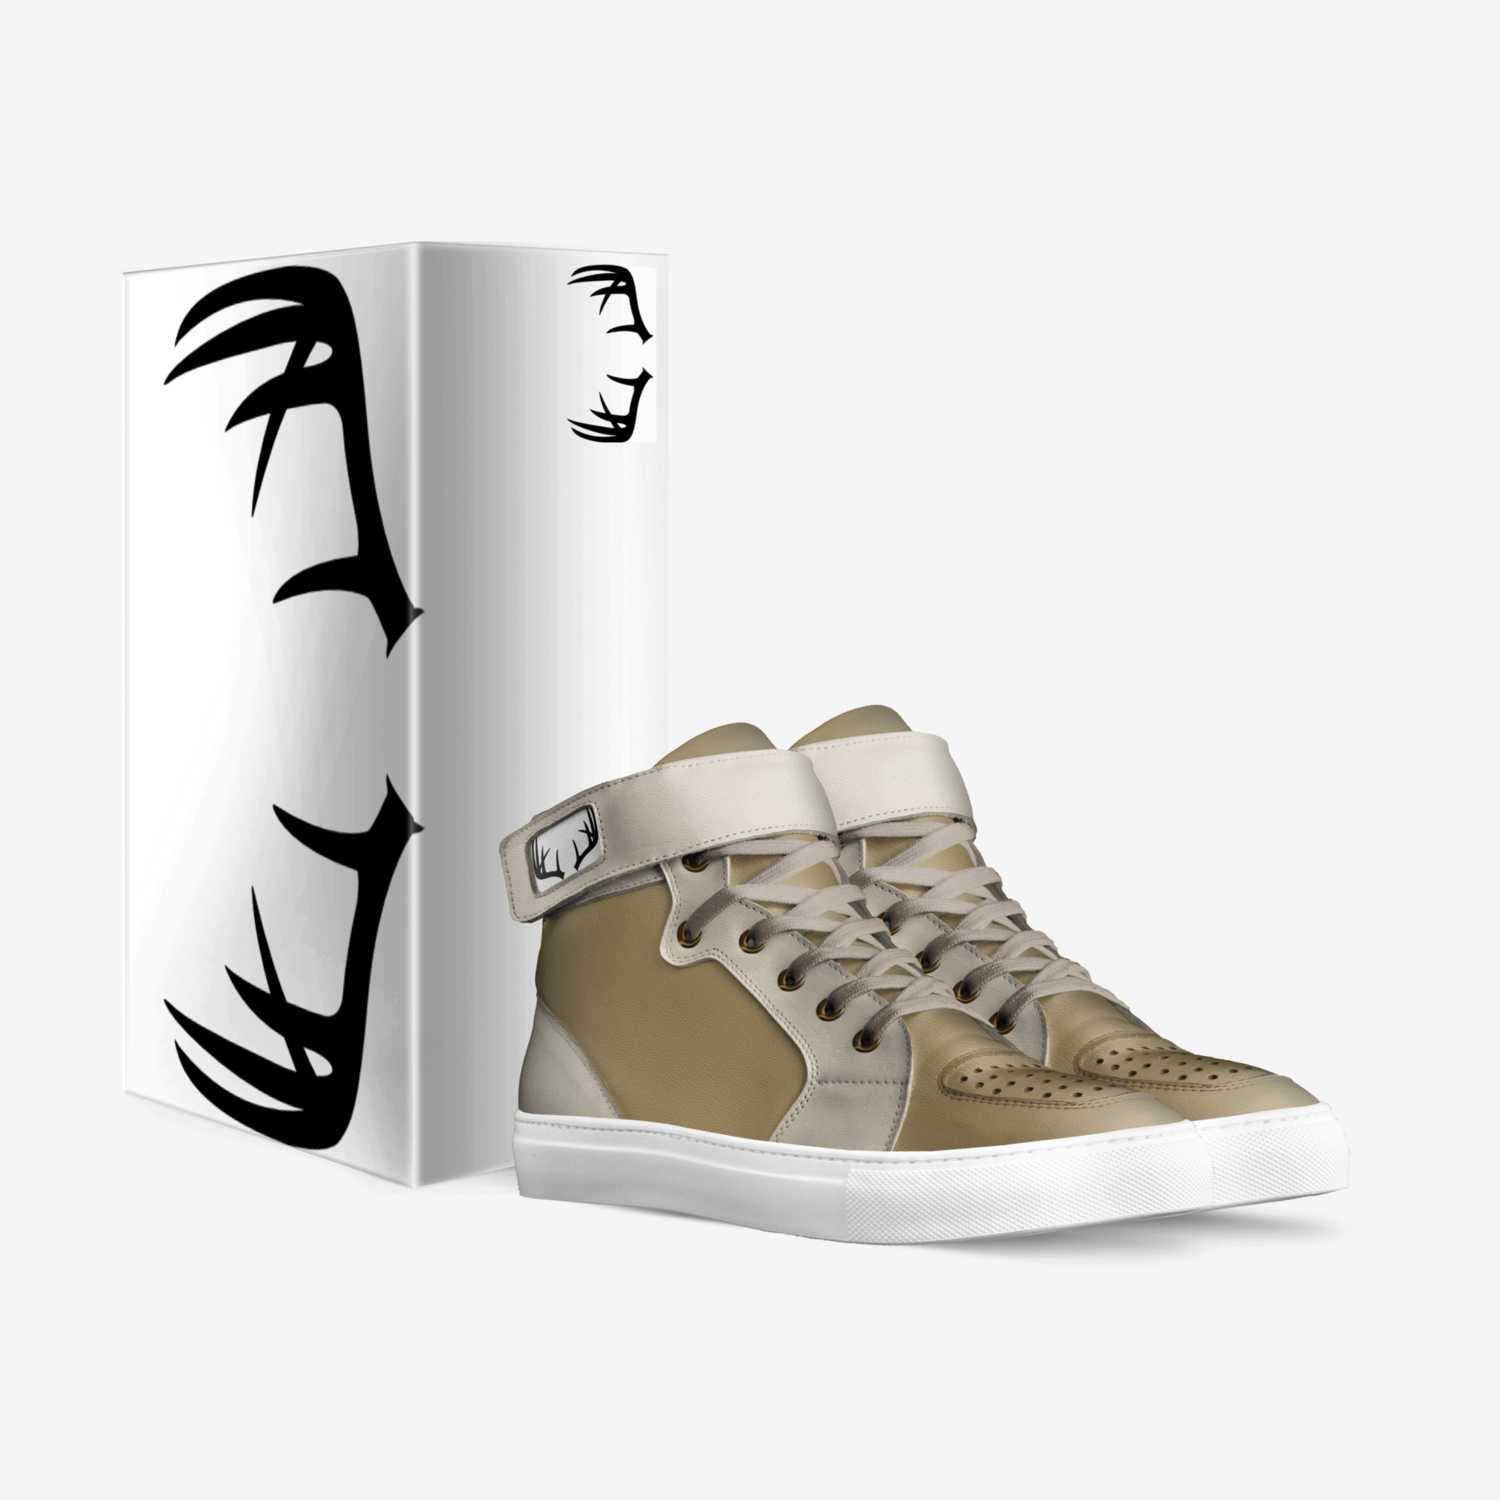 THOMAS JACK custom made in Italy shoes by Thomas Jack Watkins | Box view